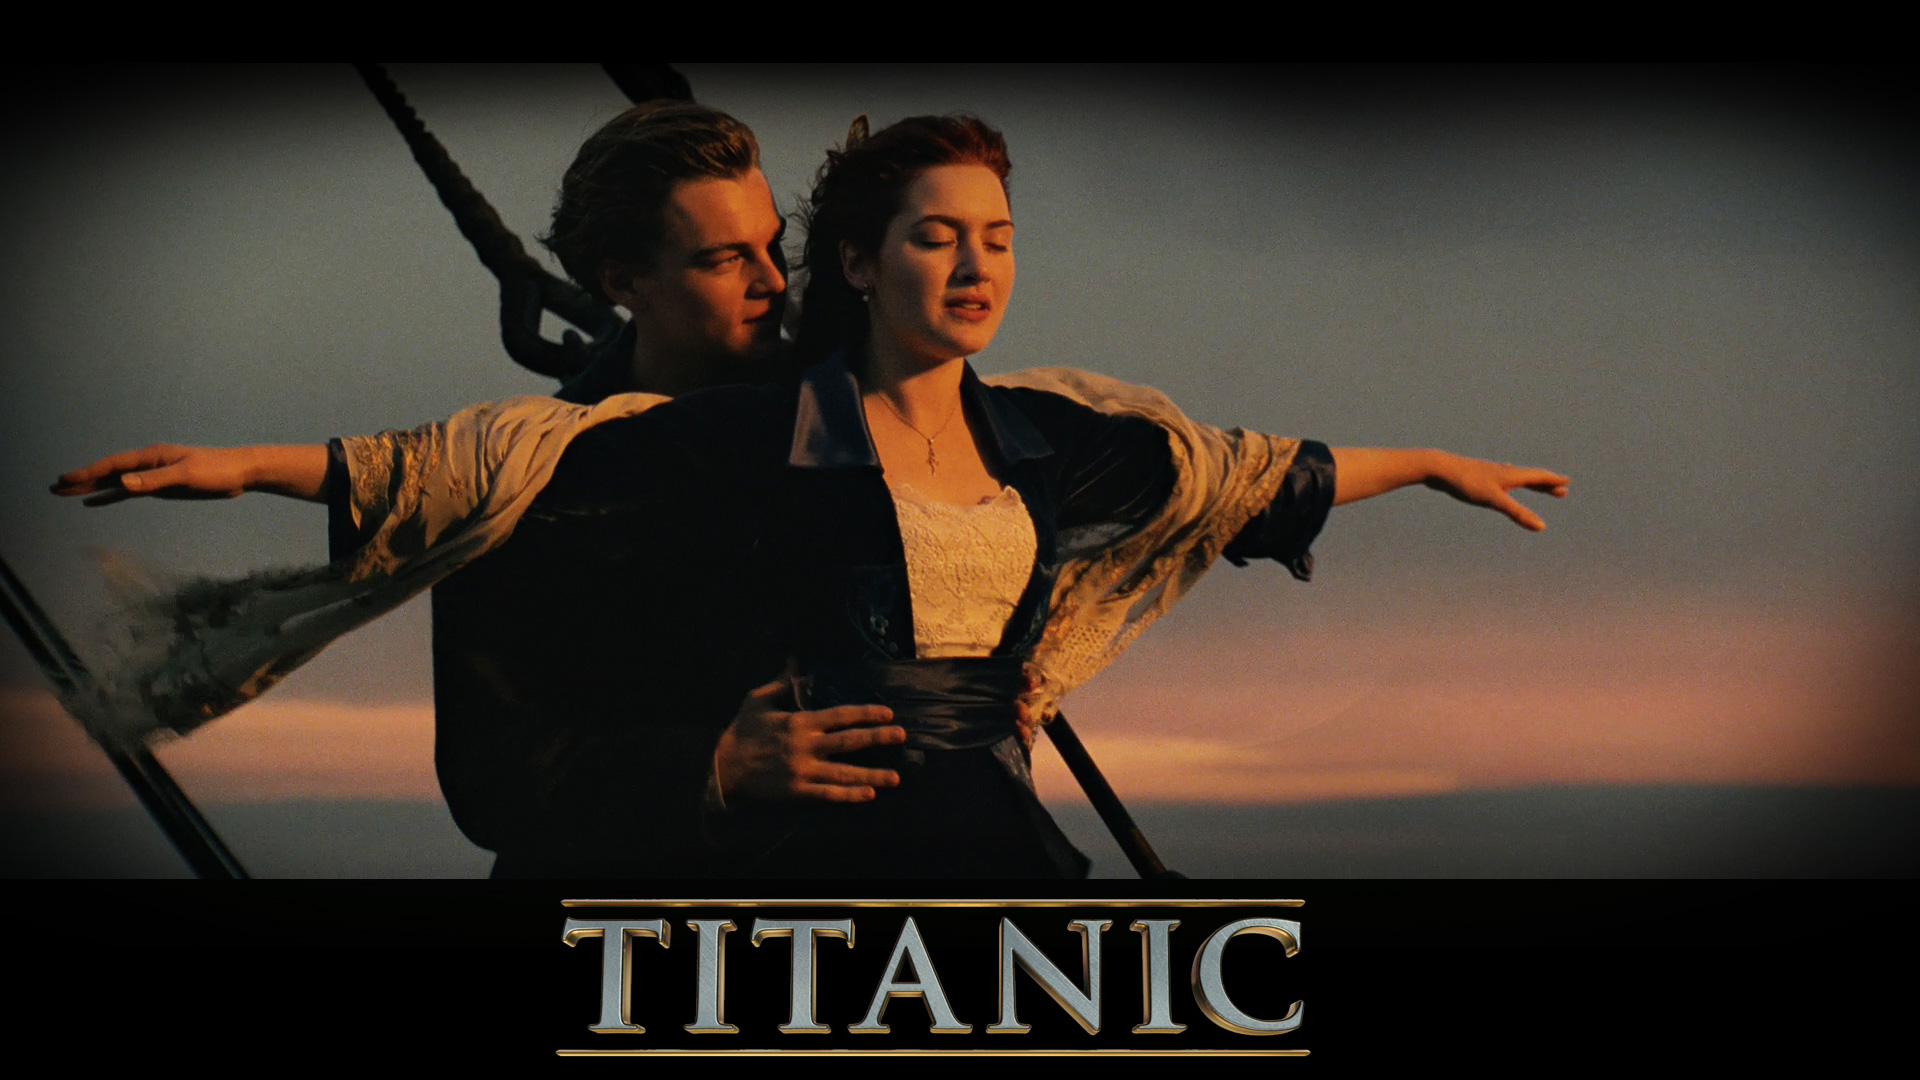 73+] Titanic Movie Wallpapers - WallpaperSafari